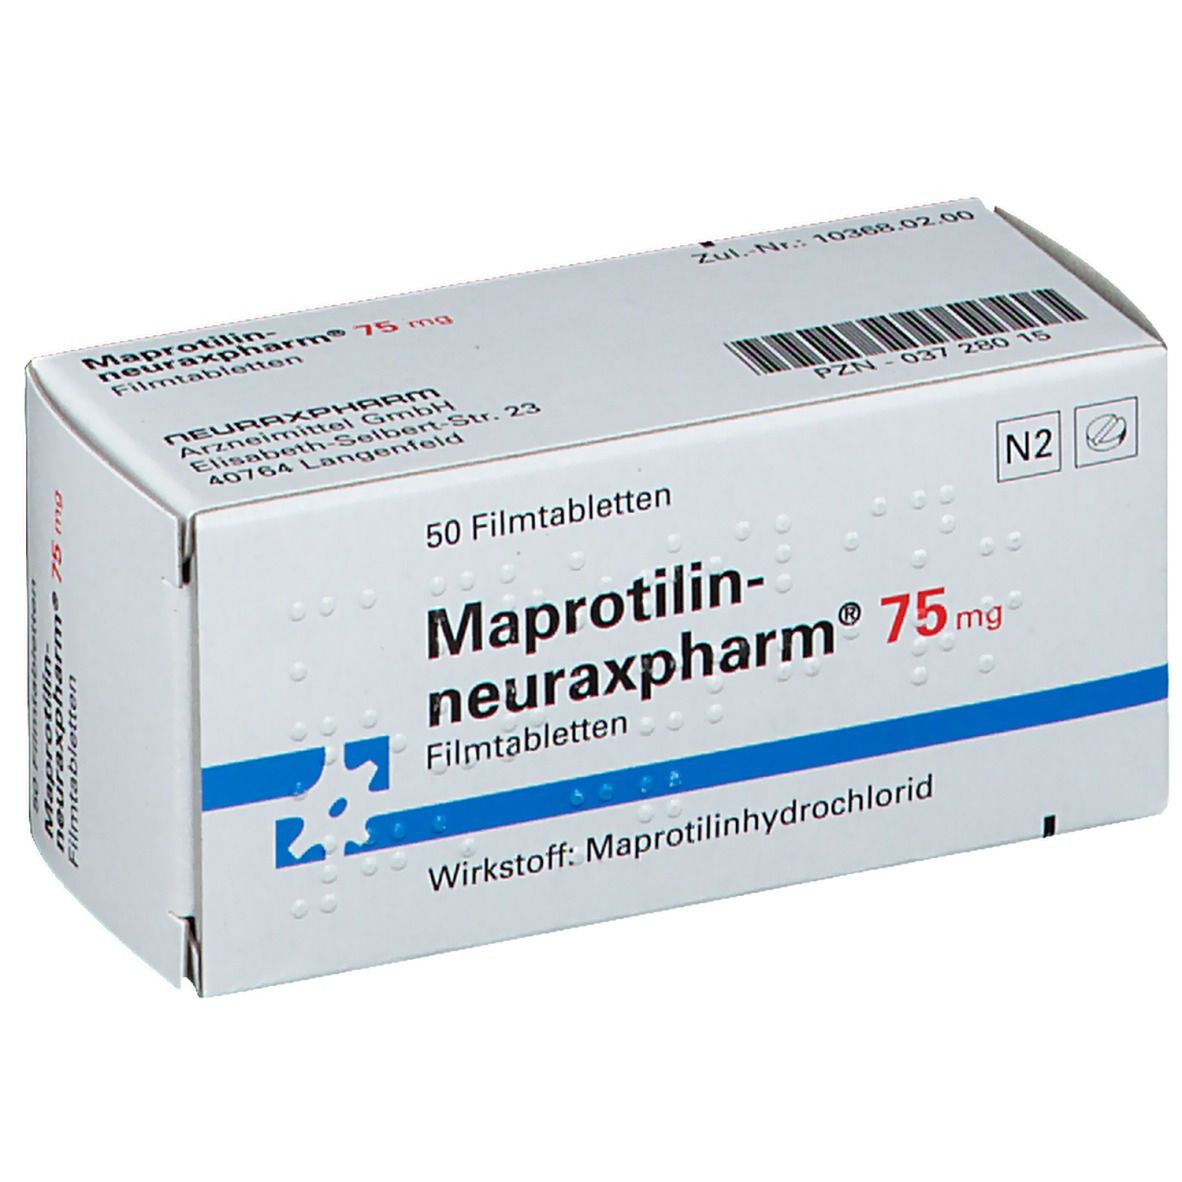 Maprotilin-neuraxpharm® 75 mg